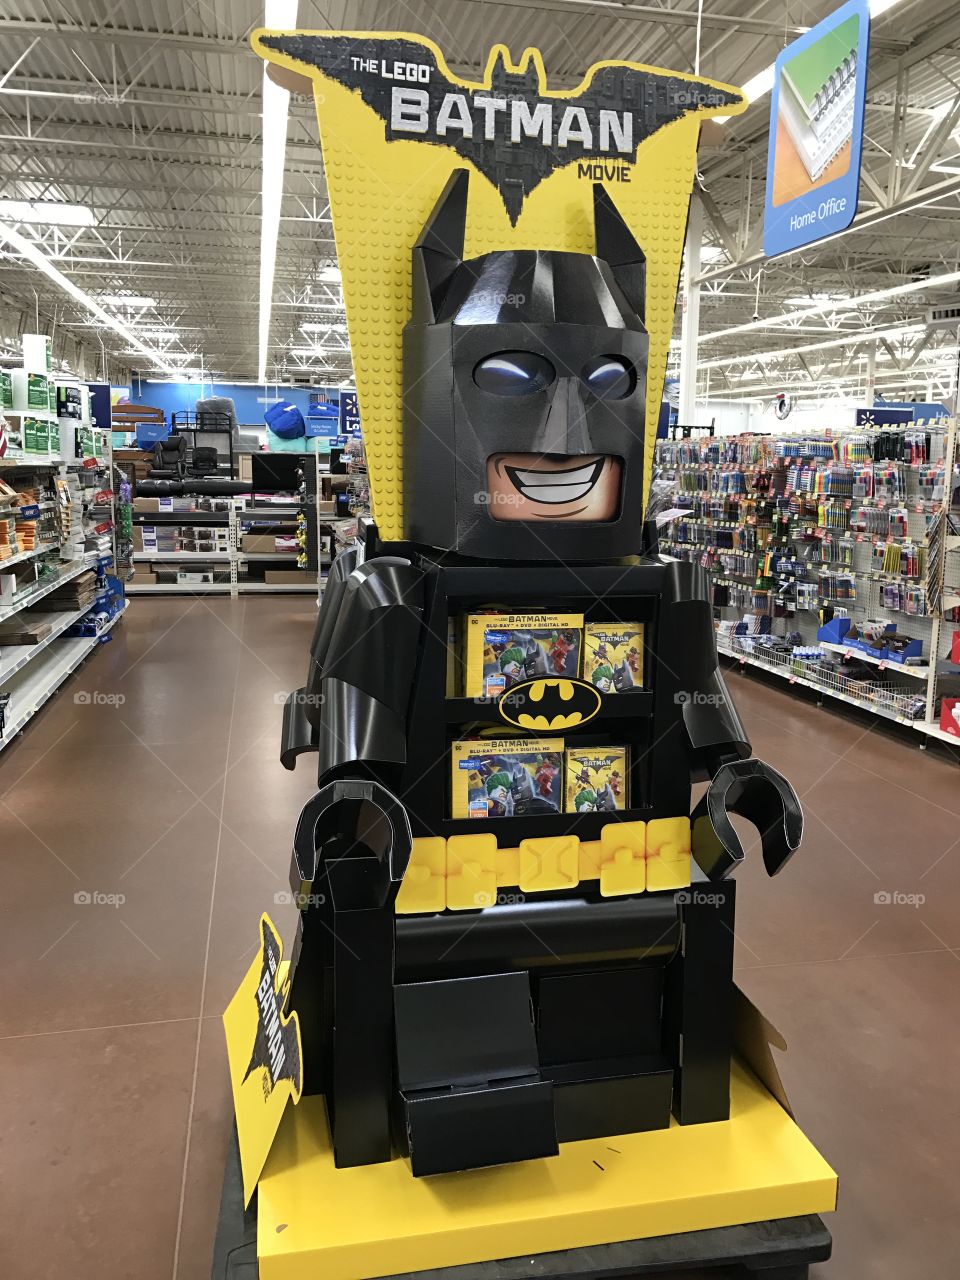 Lego Batman Display
